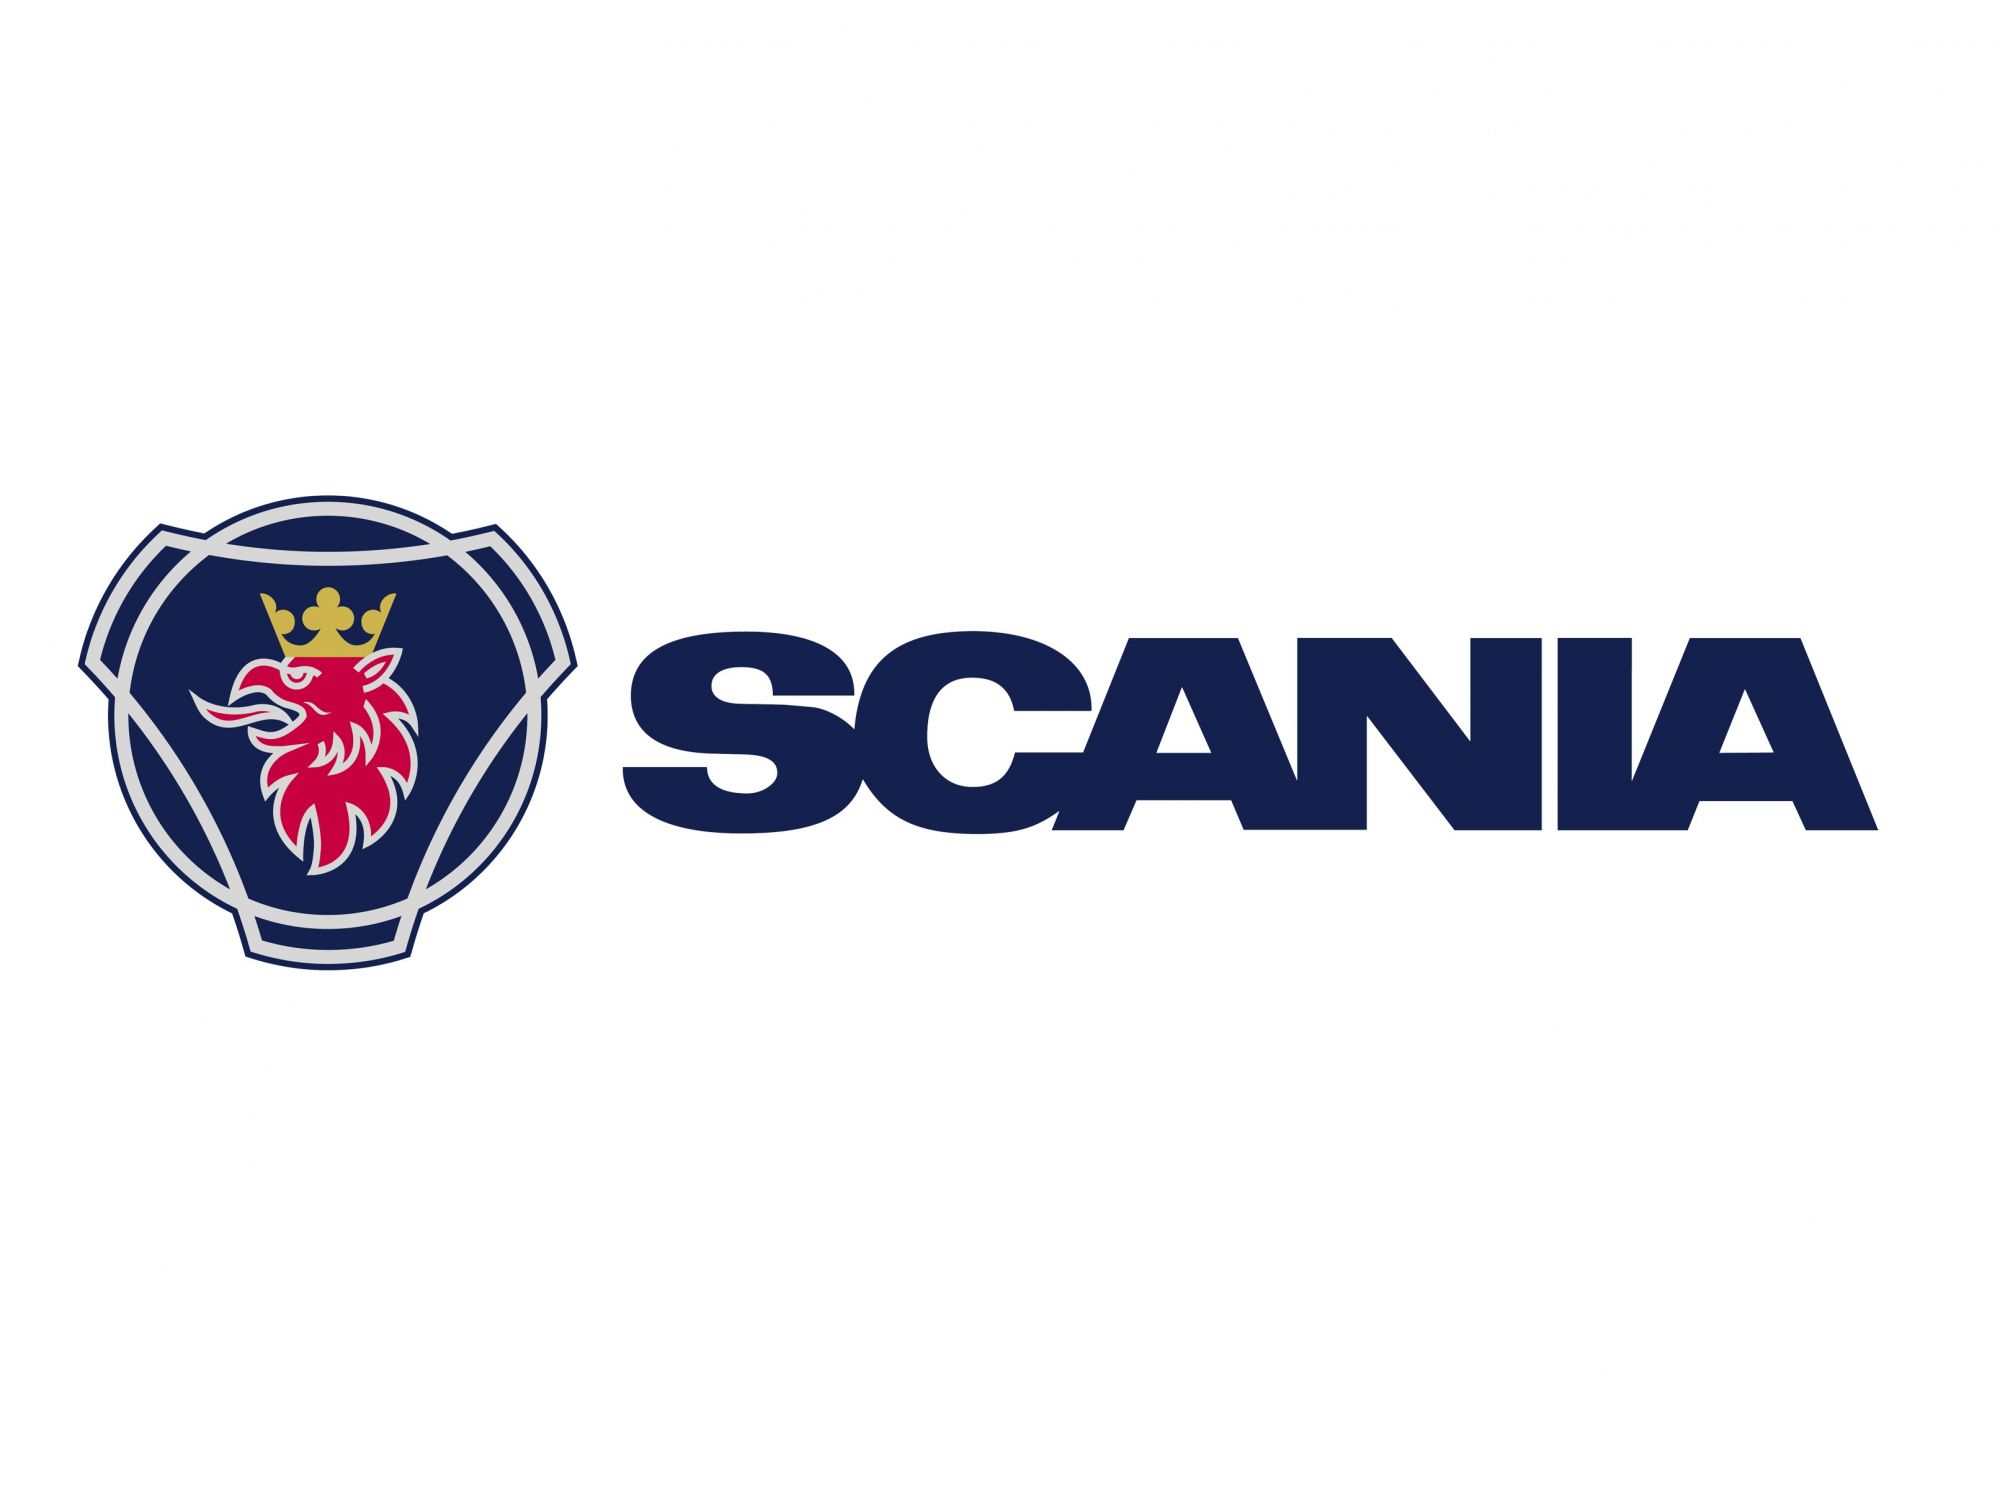 scania-logo-6200x1800.jpg